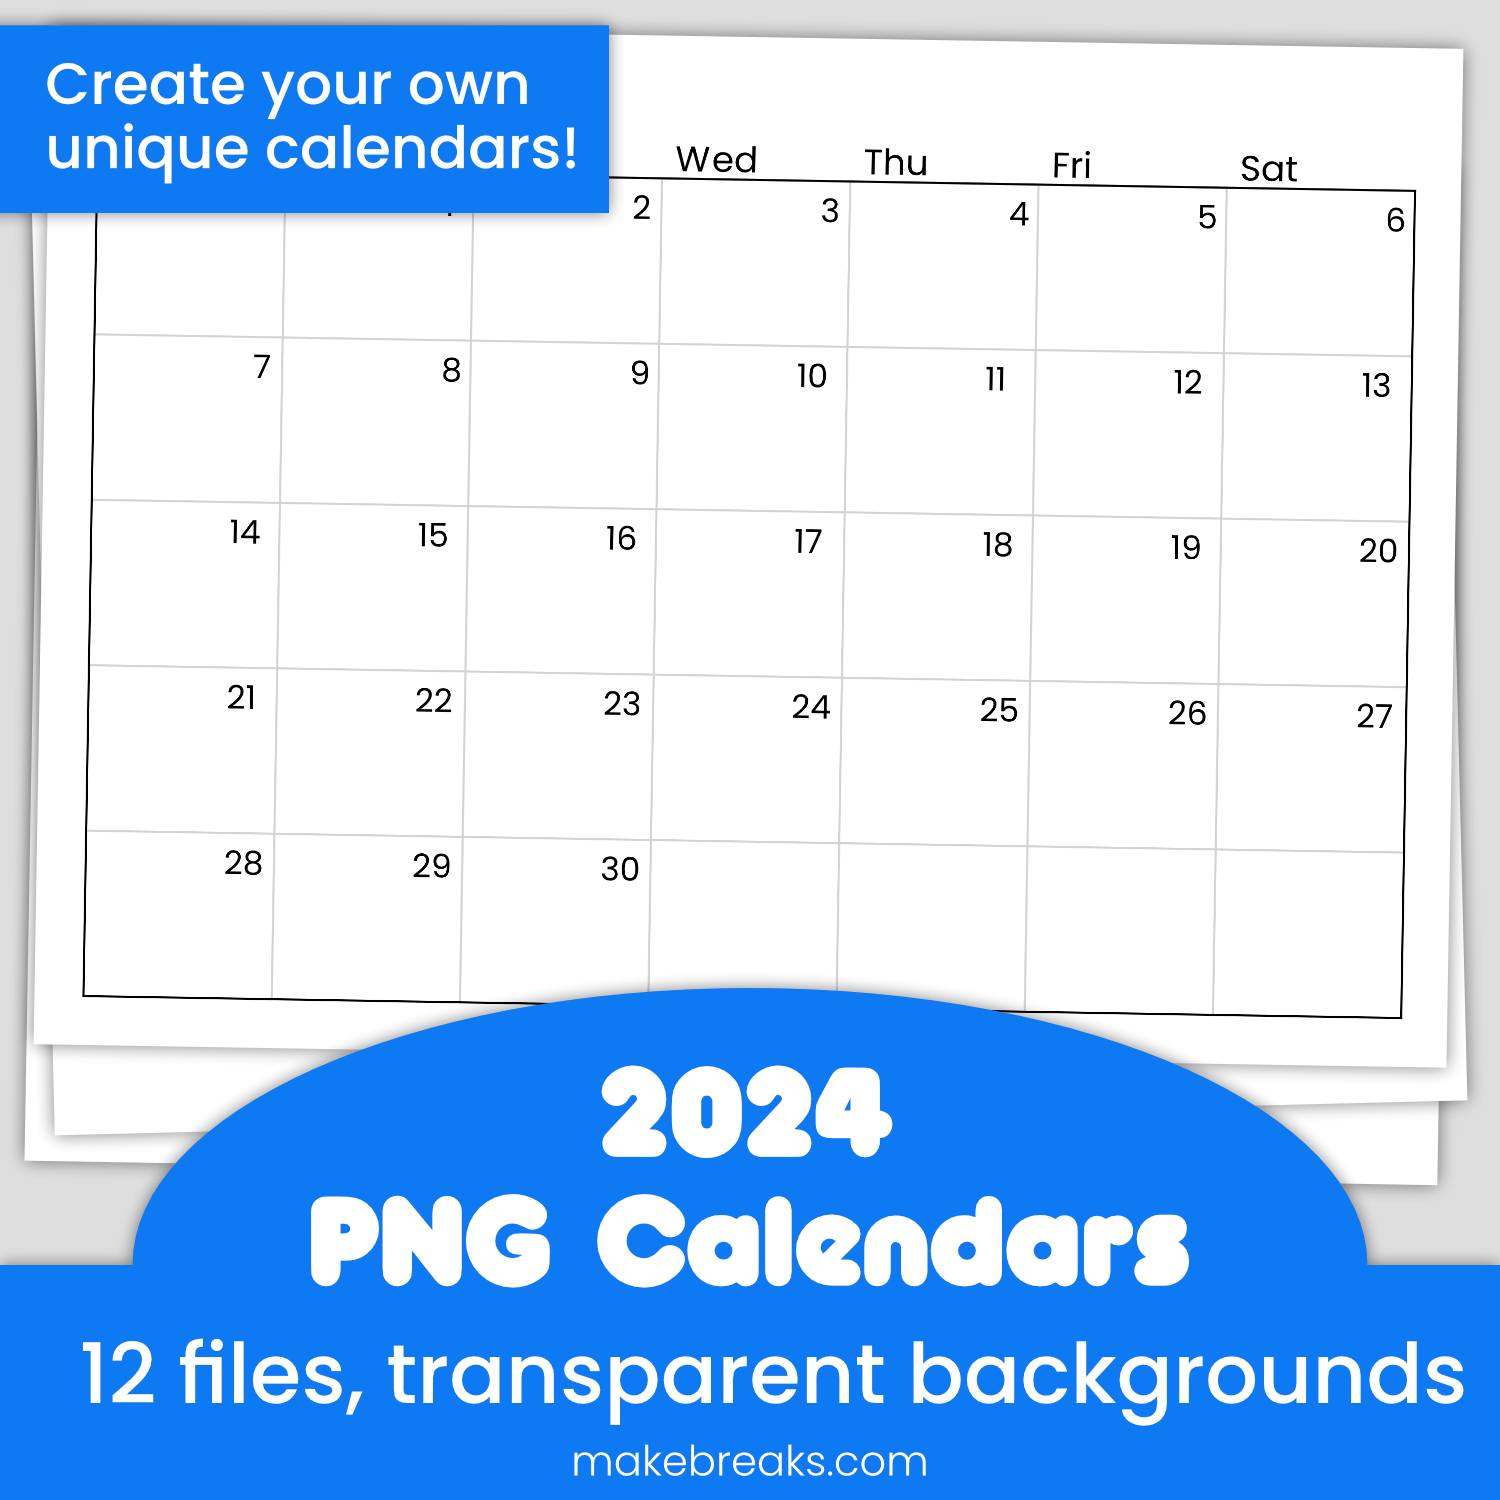 PNG Calendar Templates – Create Your Own Custom Calendar